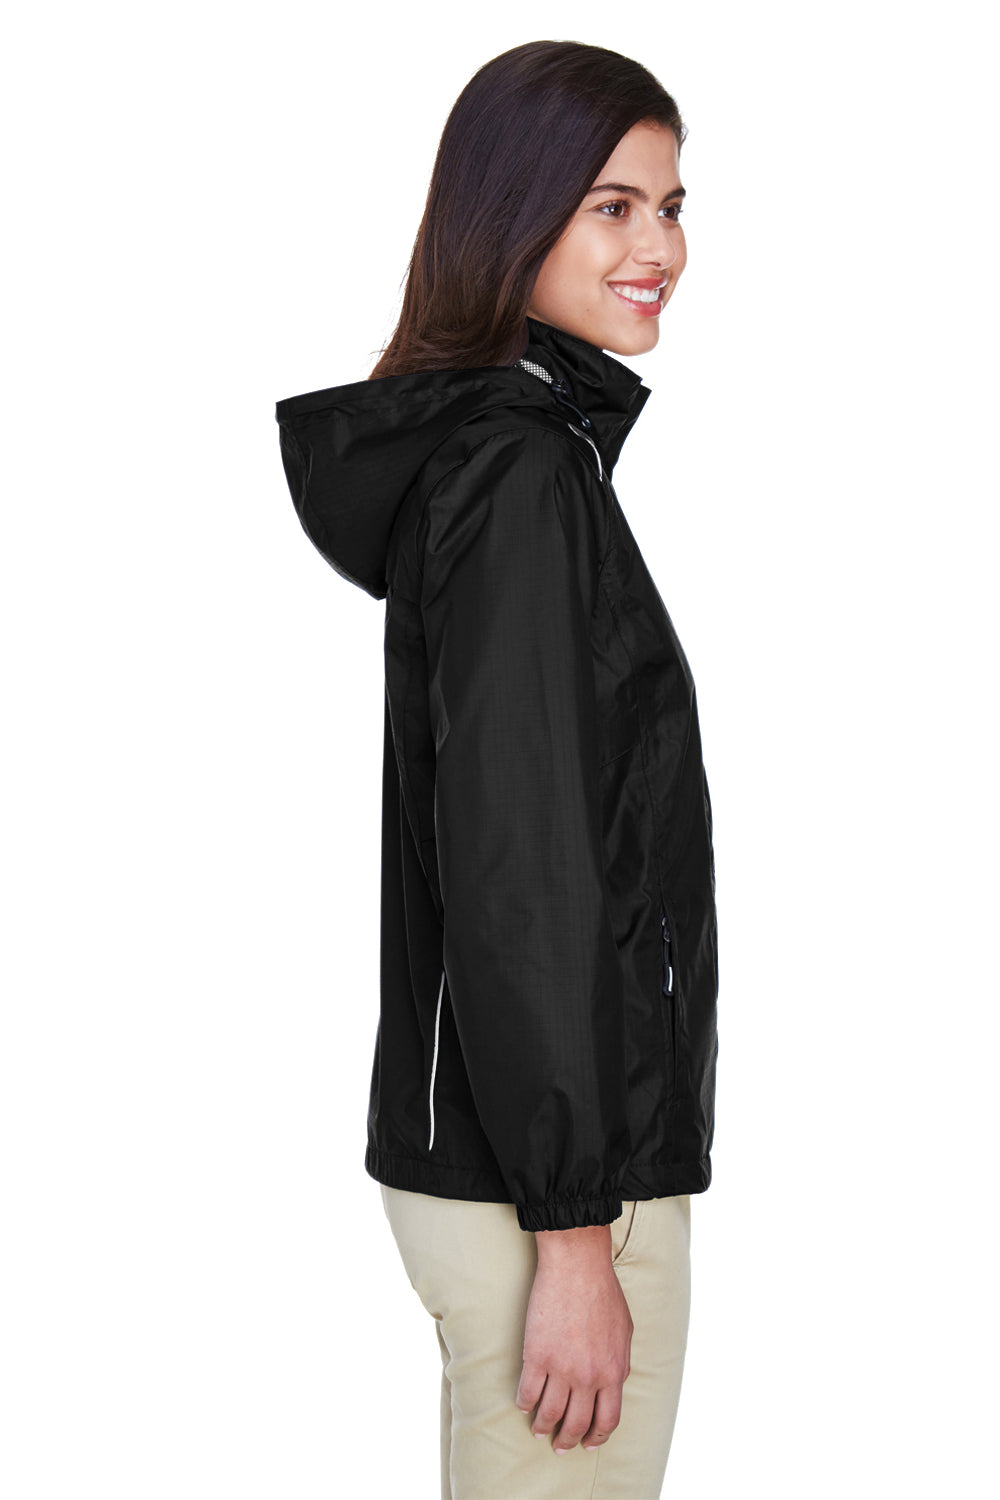 Core 365 78185 Womens Climate Waterproof Full Zip Hooded Jacket Black Side